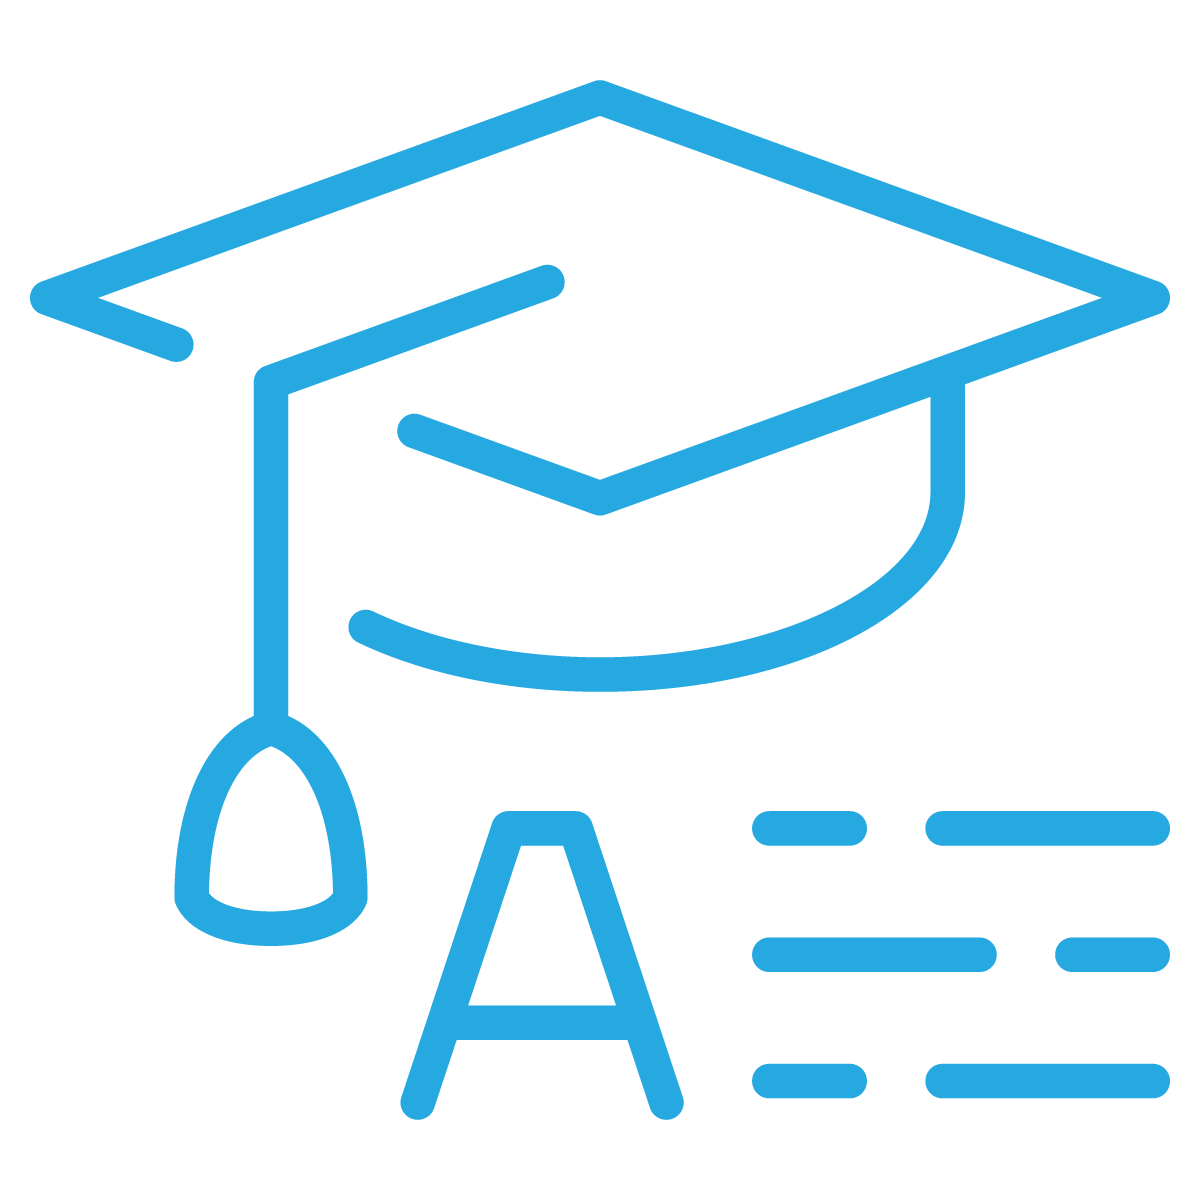 A graduation cap icon on a white background for menu design services.